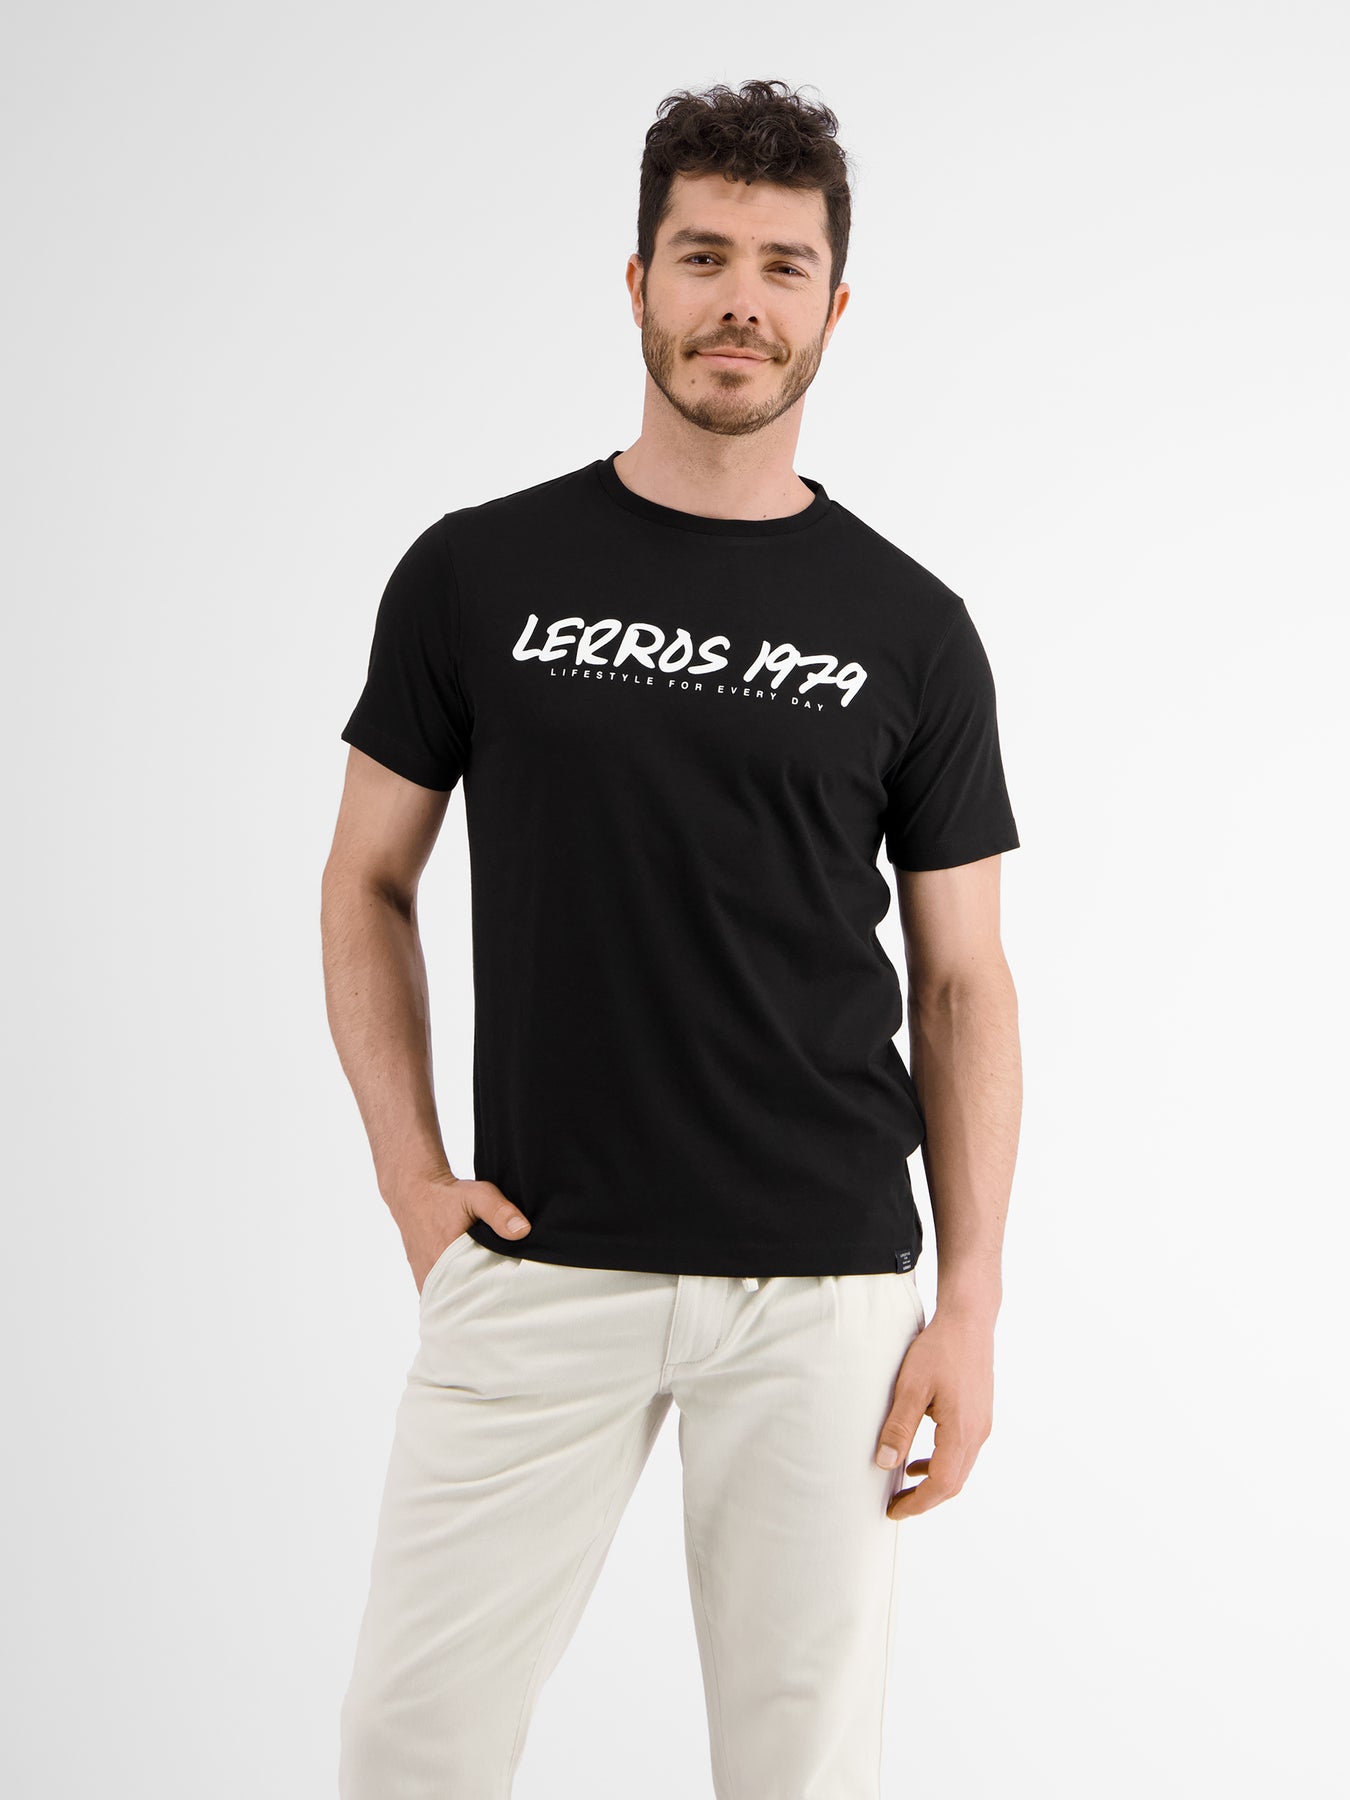 LERROS SHOP – *LERROS 1979* T-Shirt